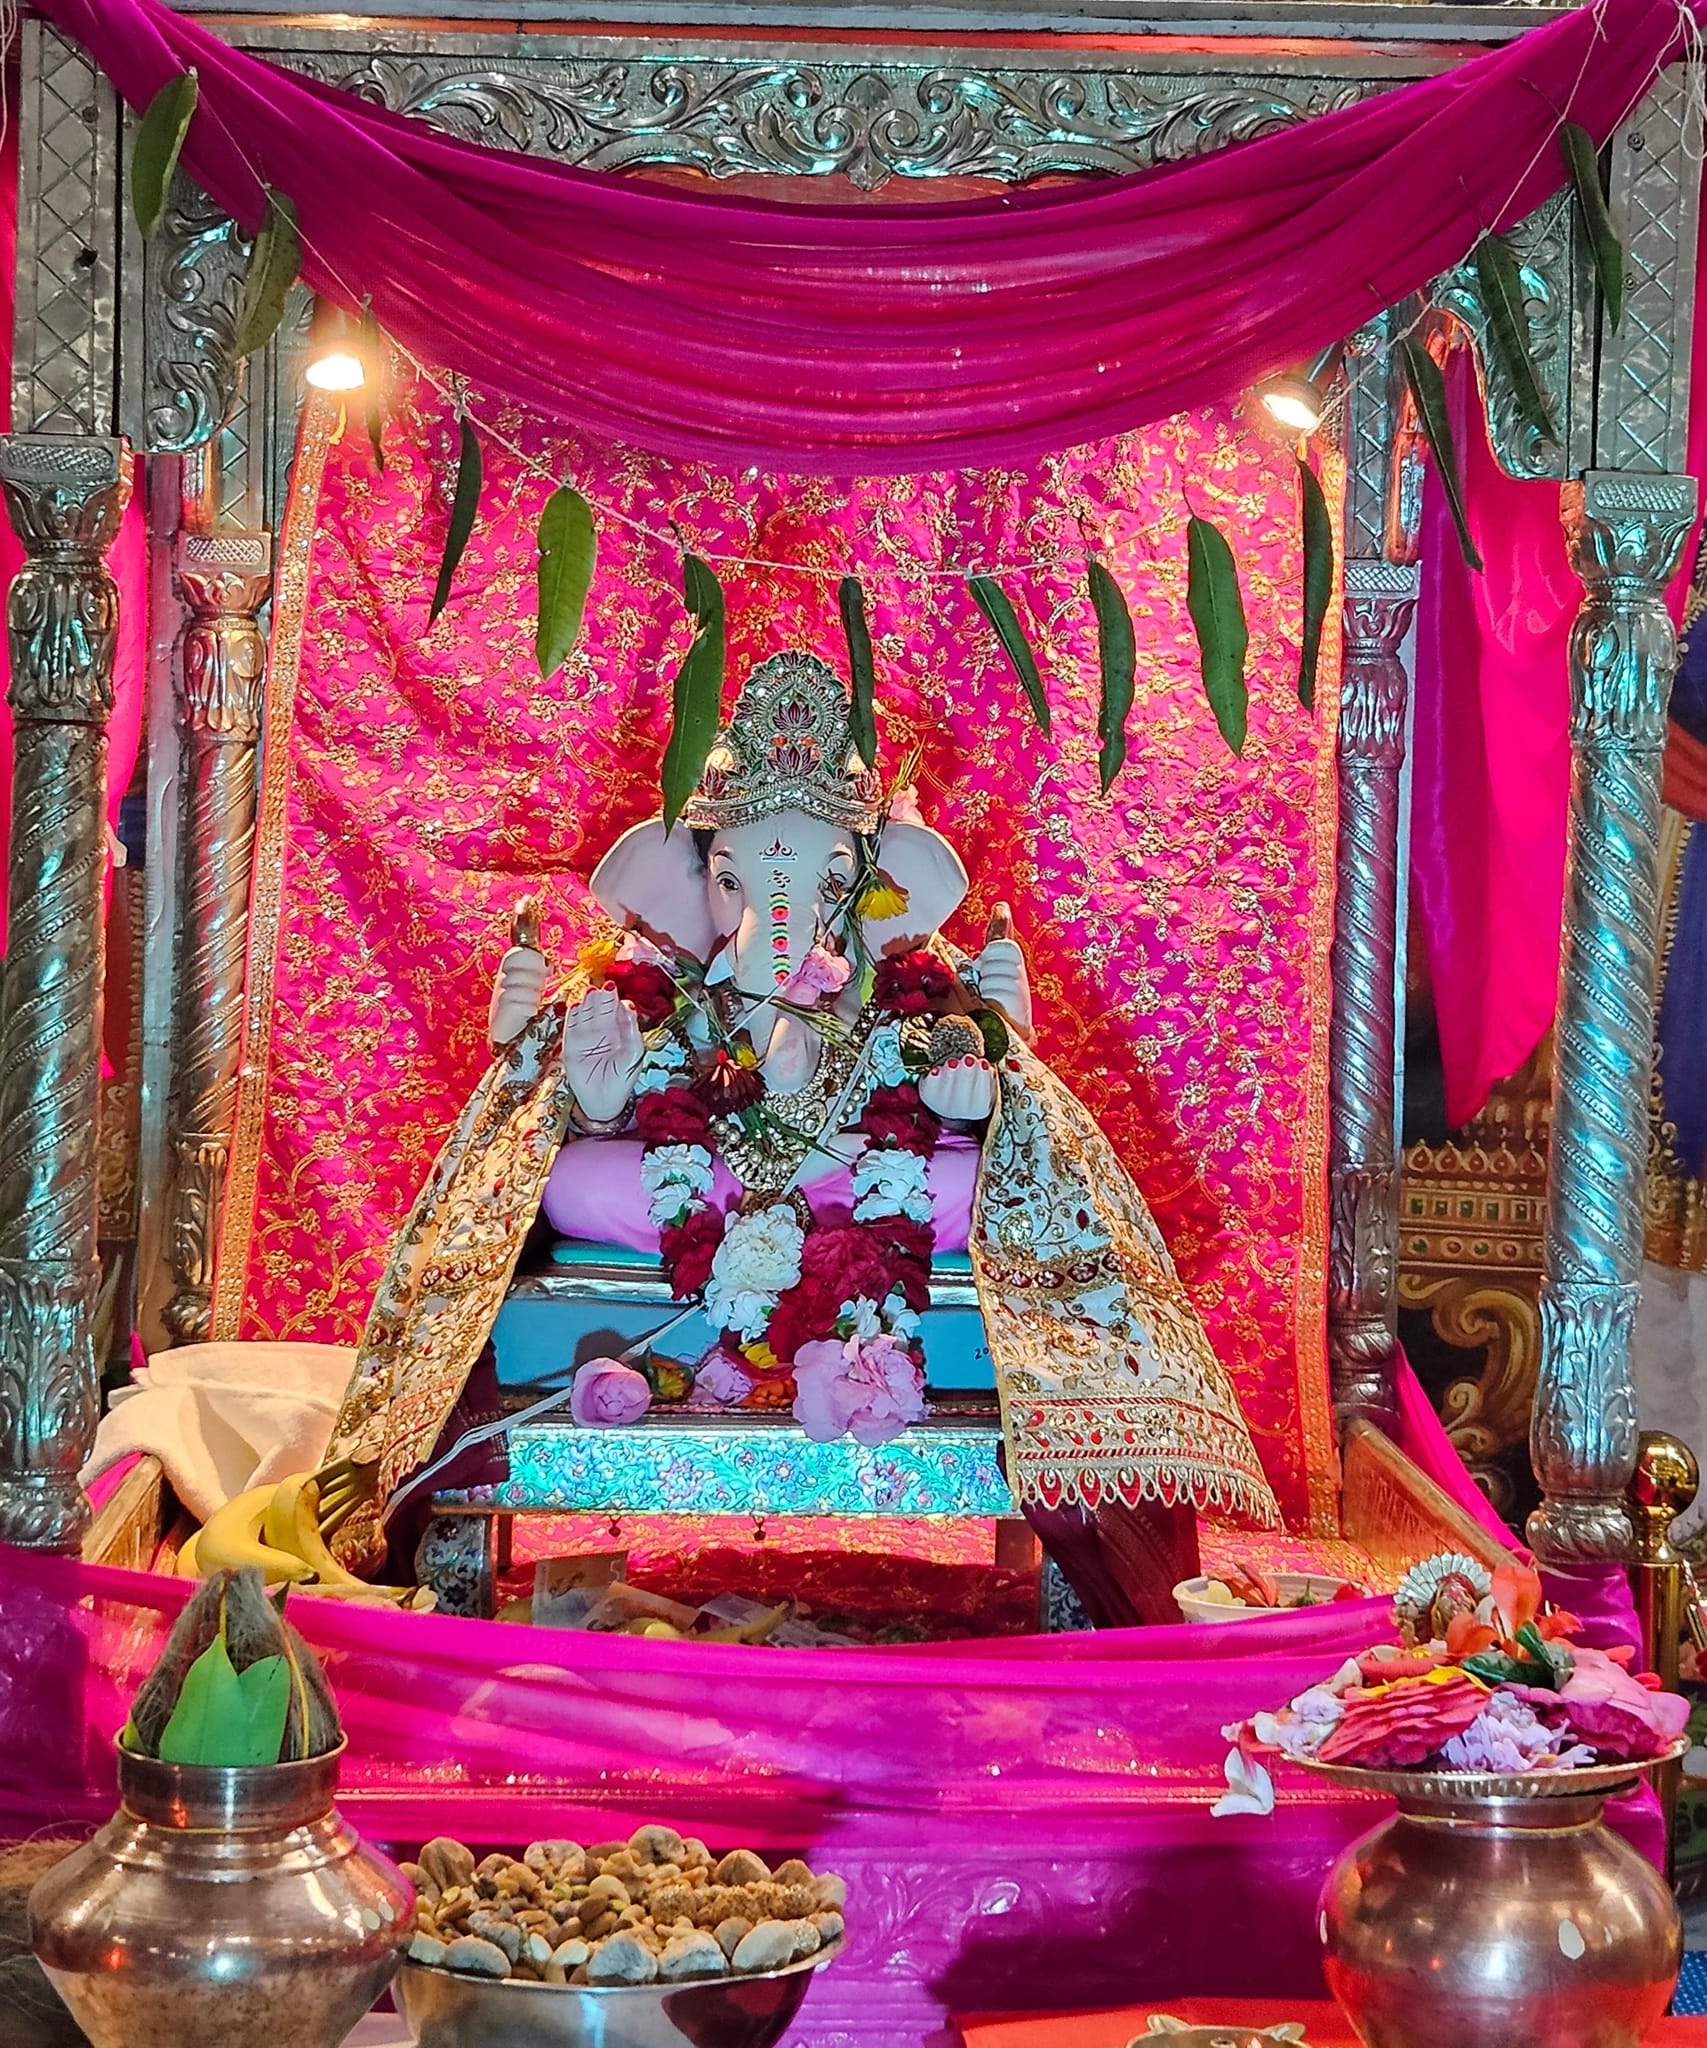 Chavti Ganesh ji